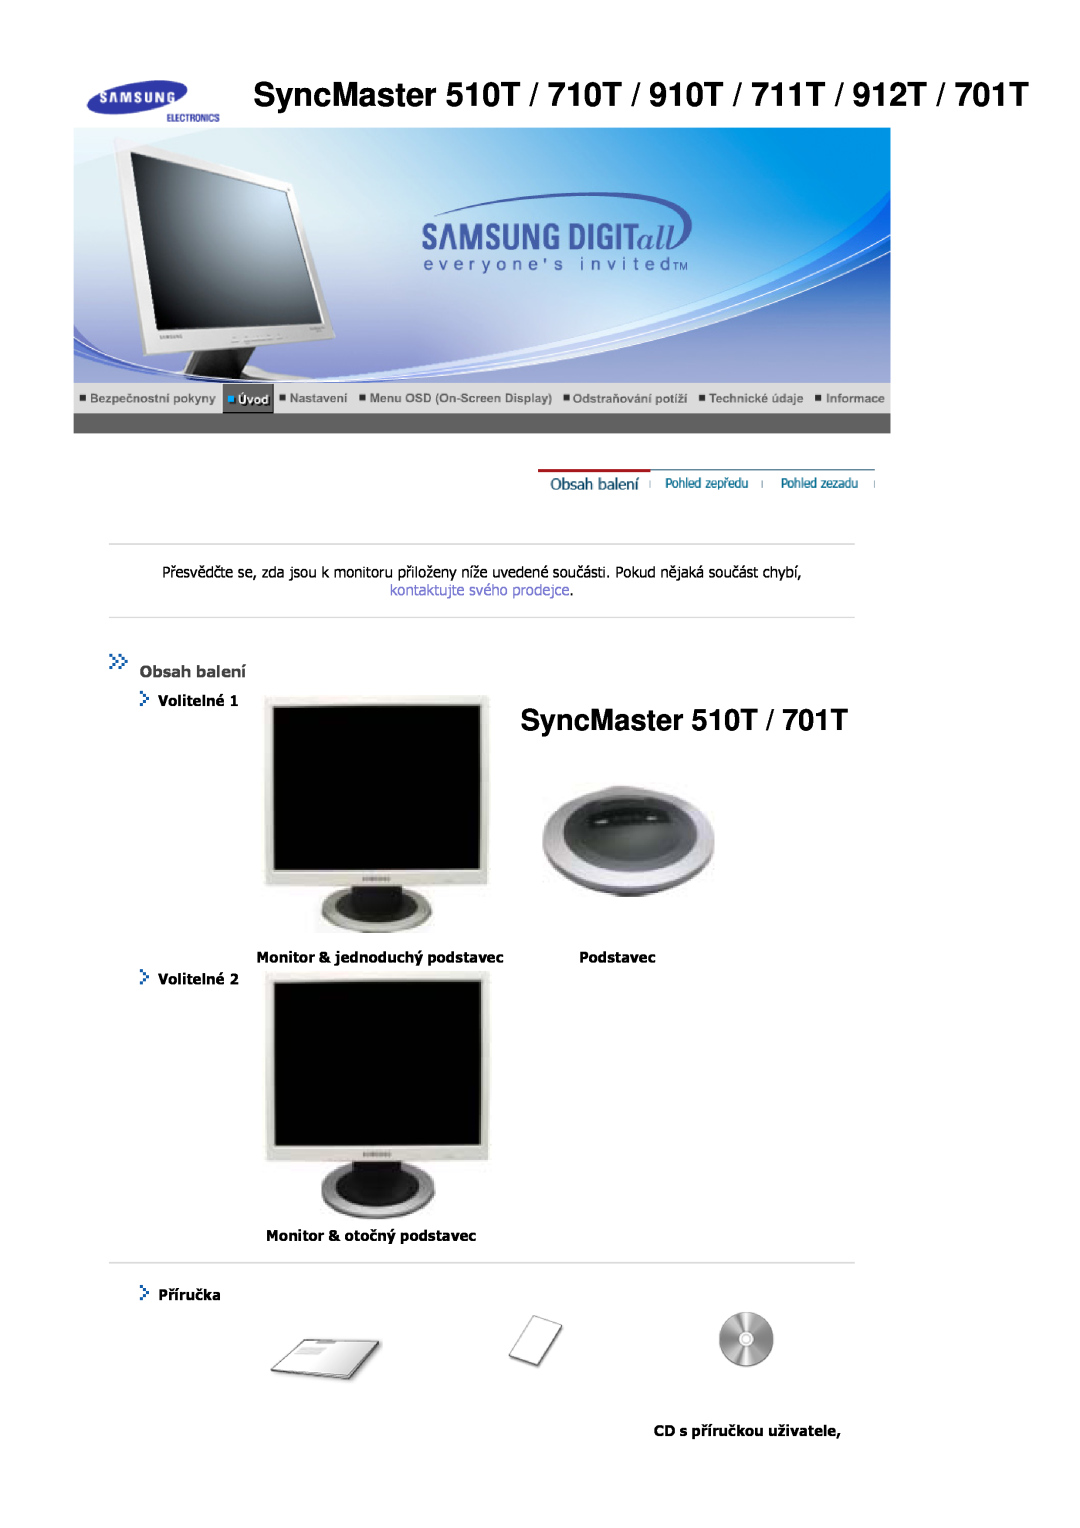 Samsung MJ15ASSS/EDC SyncMaster 510T / 710T / 910T / 711T / 912T / 701T, SyncMaster 510T / 701T, Obsah balení, Volitelné 